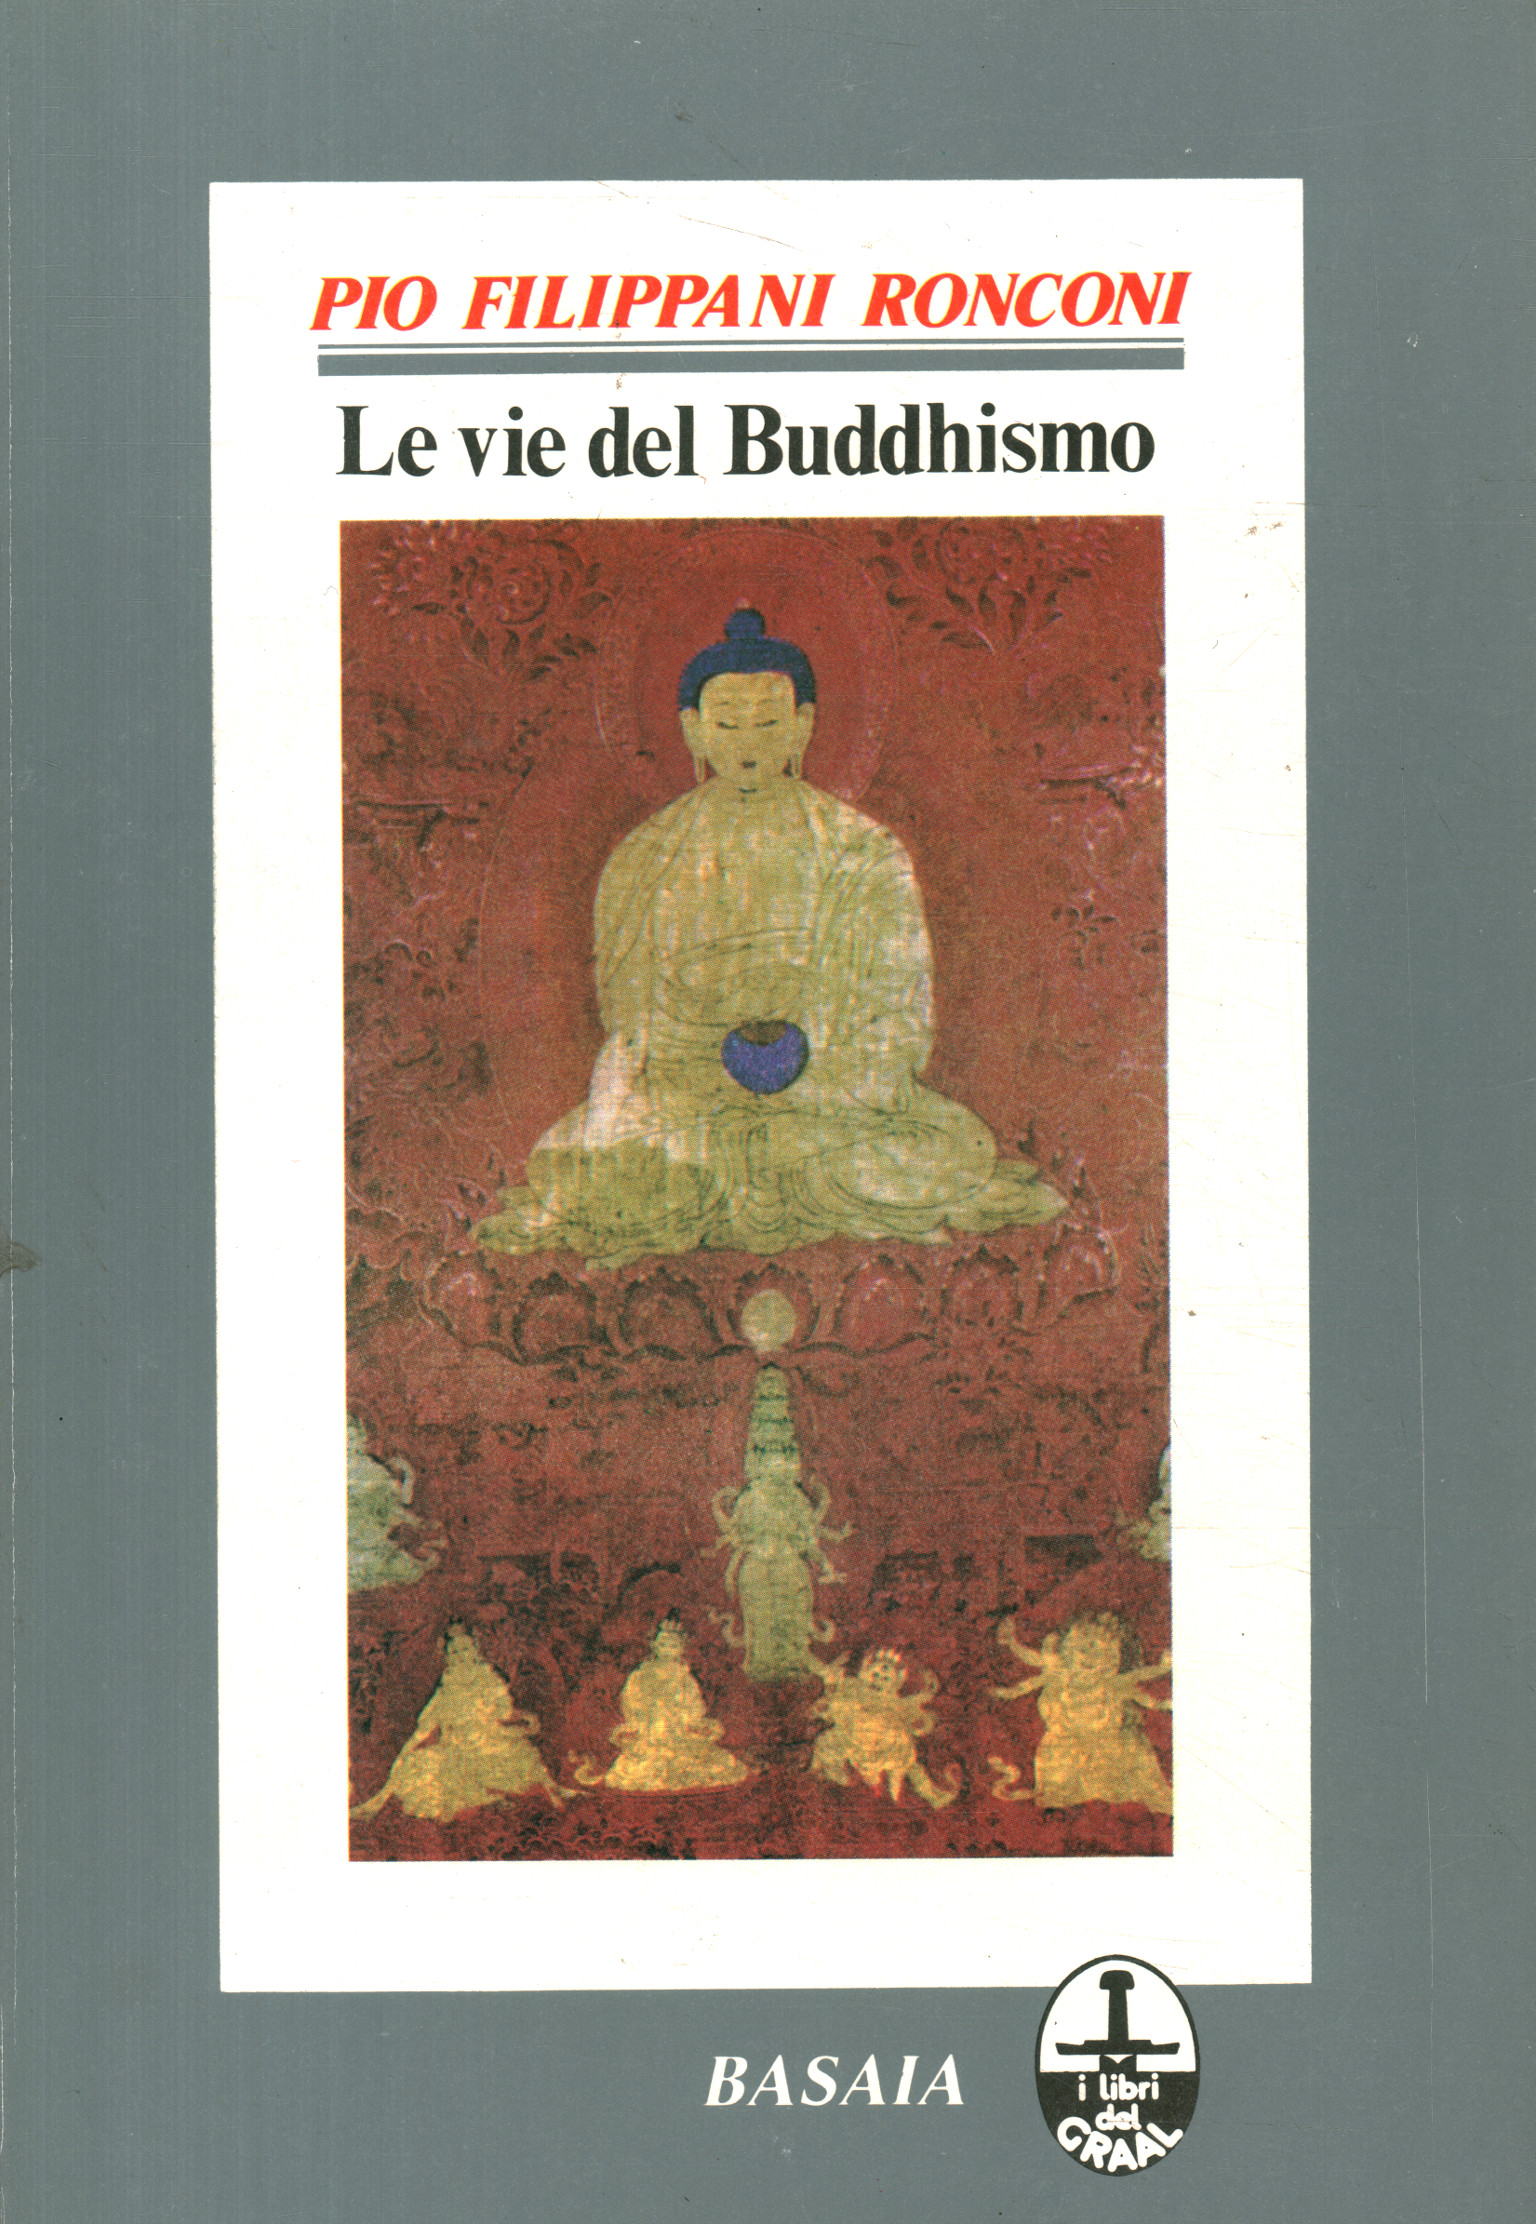 The ways of Buddhism